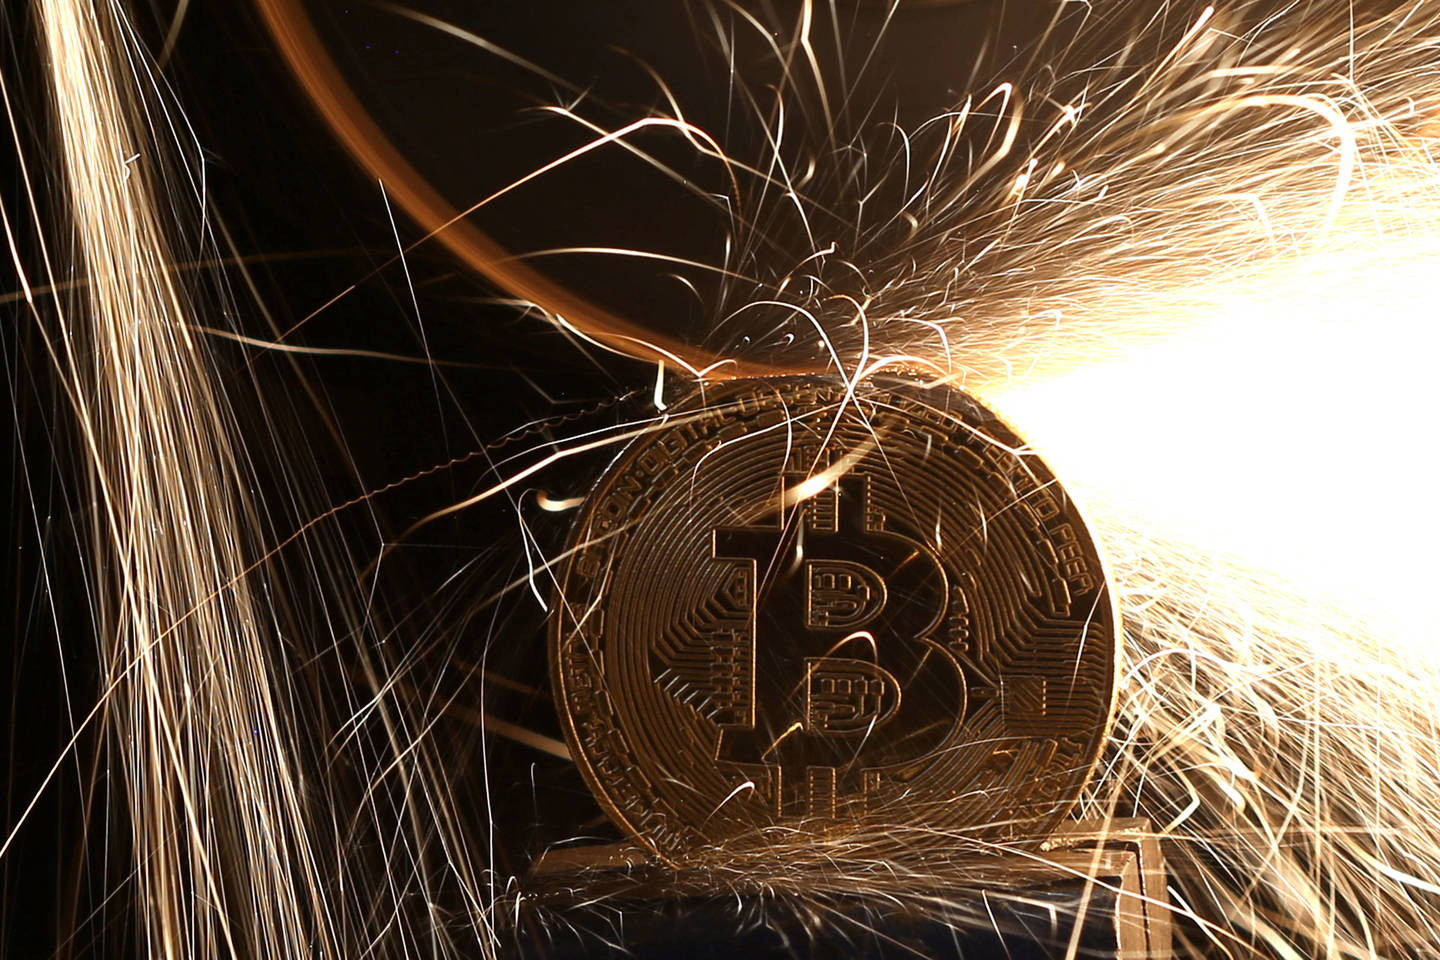 Britanijoje Barclays debiutuoja su bitcoin kripto-valiuta | astroportal.lt